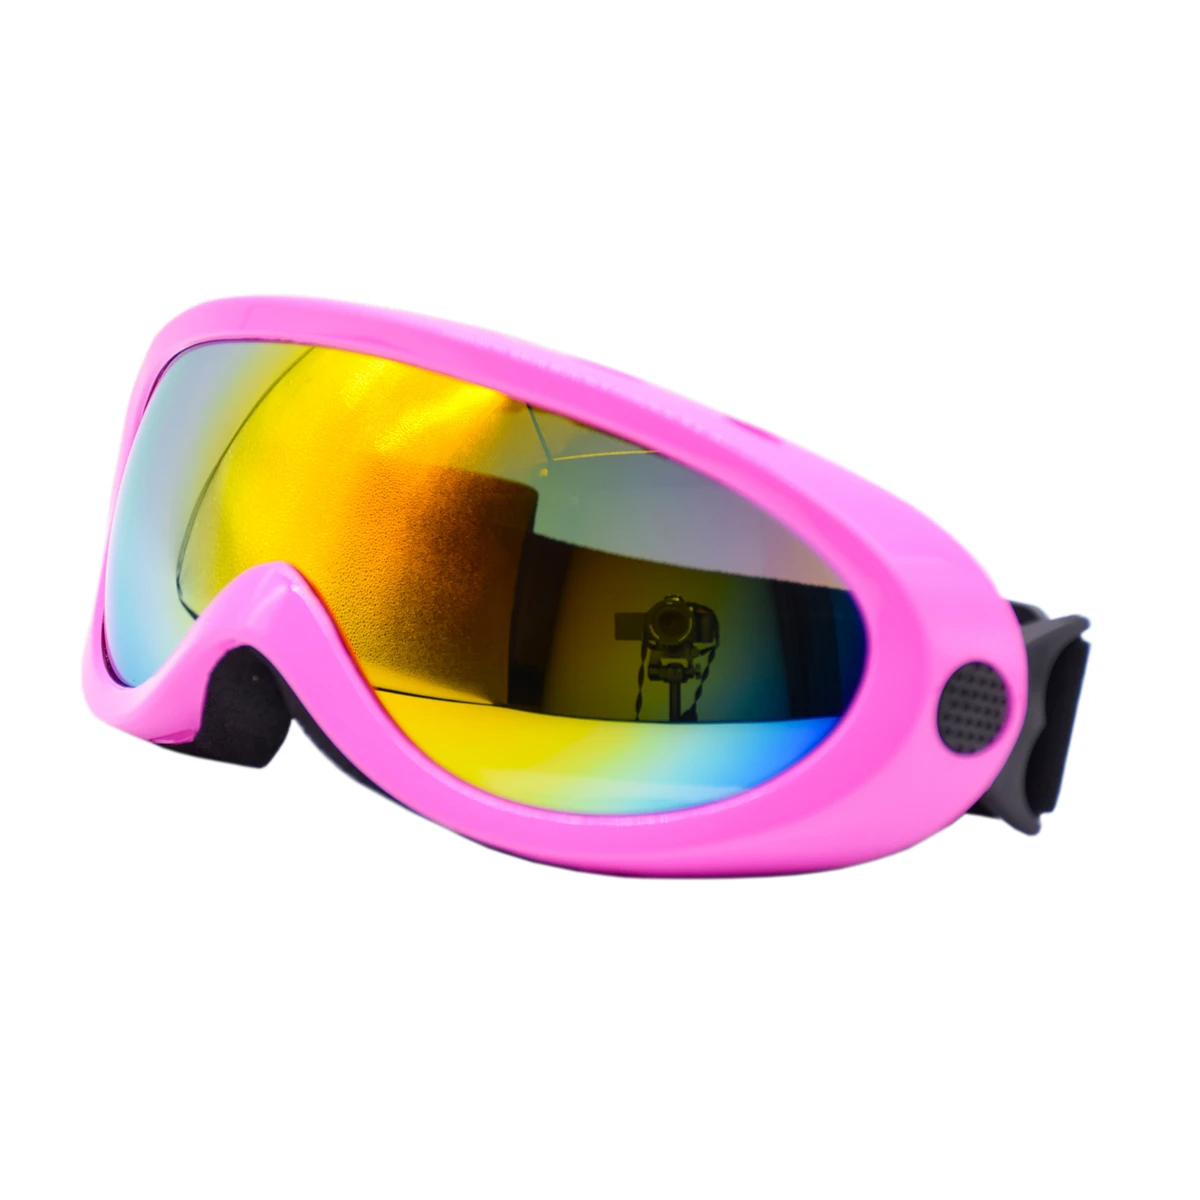 Youth Snowboard Gafas Ski Goggles Boys Girls Snow Goggle Snowboard Mask Winter oculos de neve Kids Ski Skiing Glasses Goggles